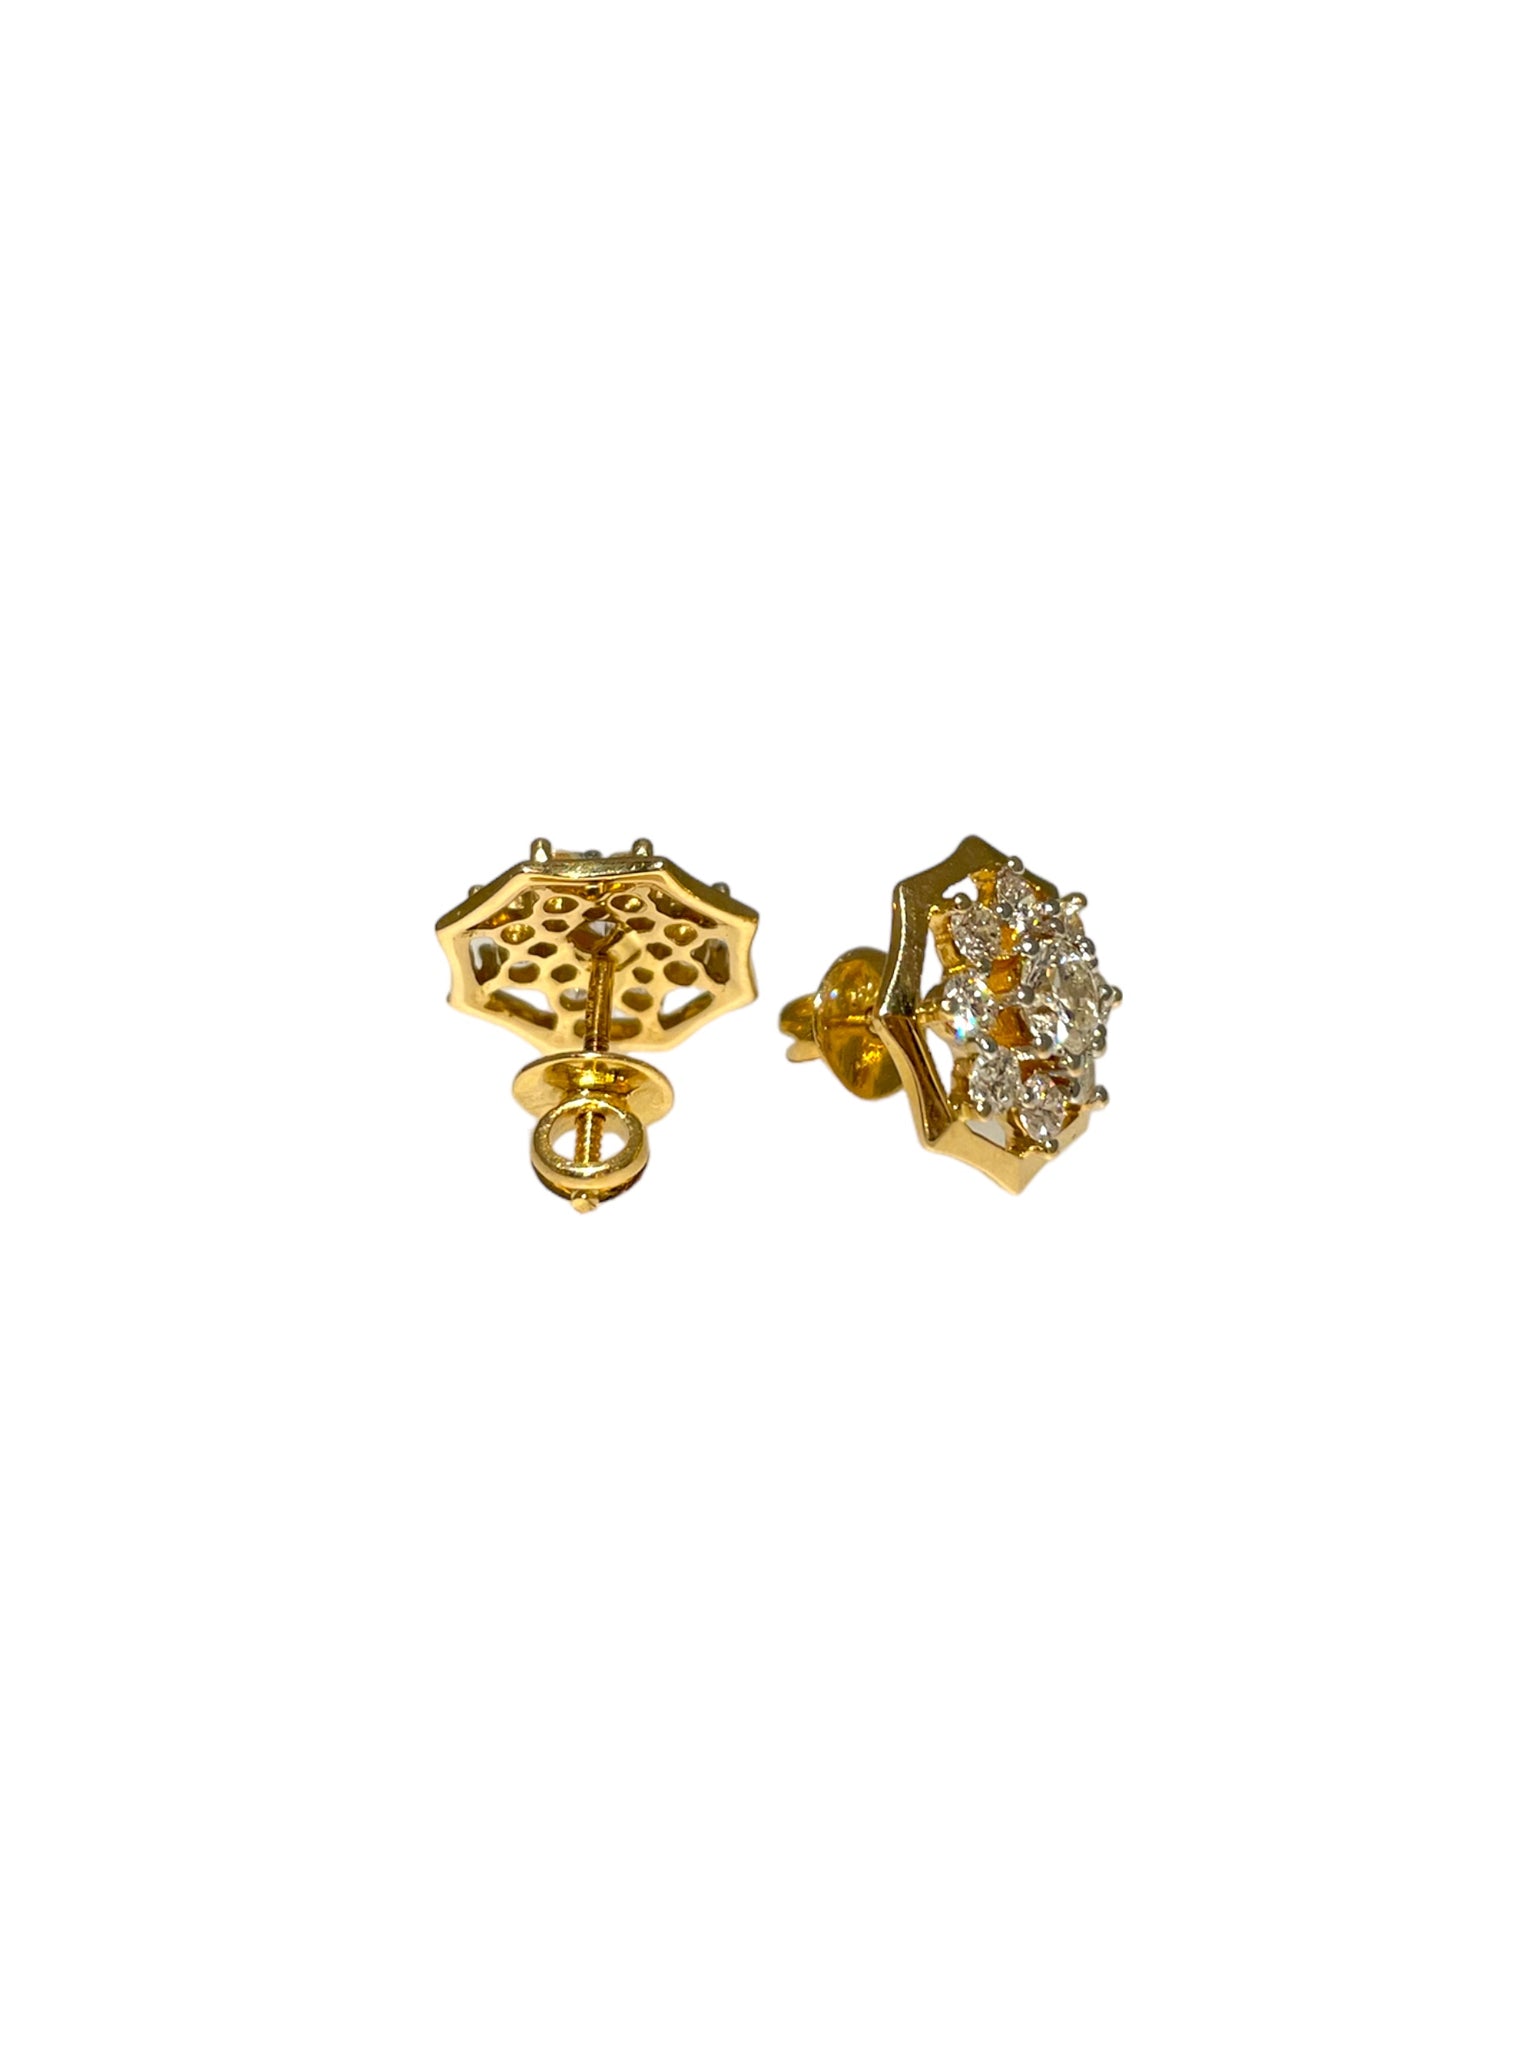 Yellow gold earrings with diamond